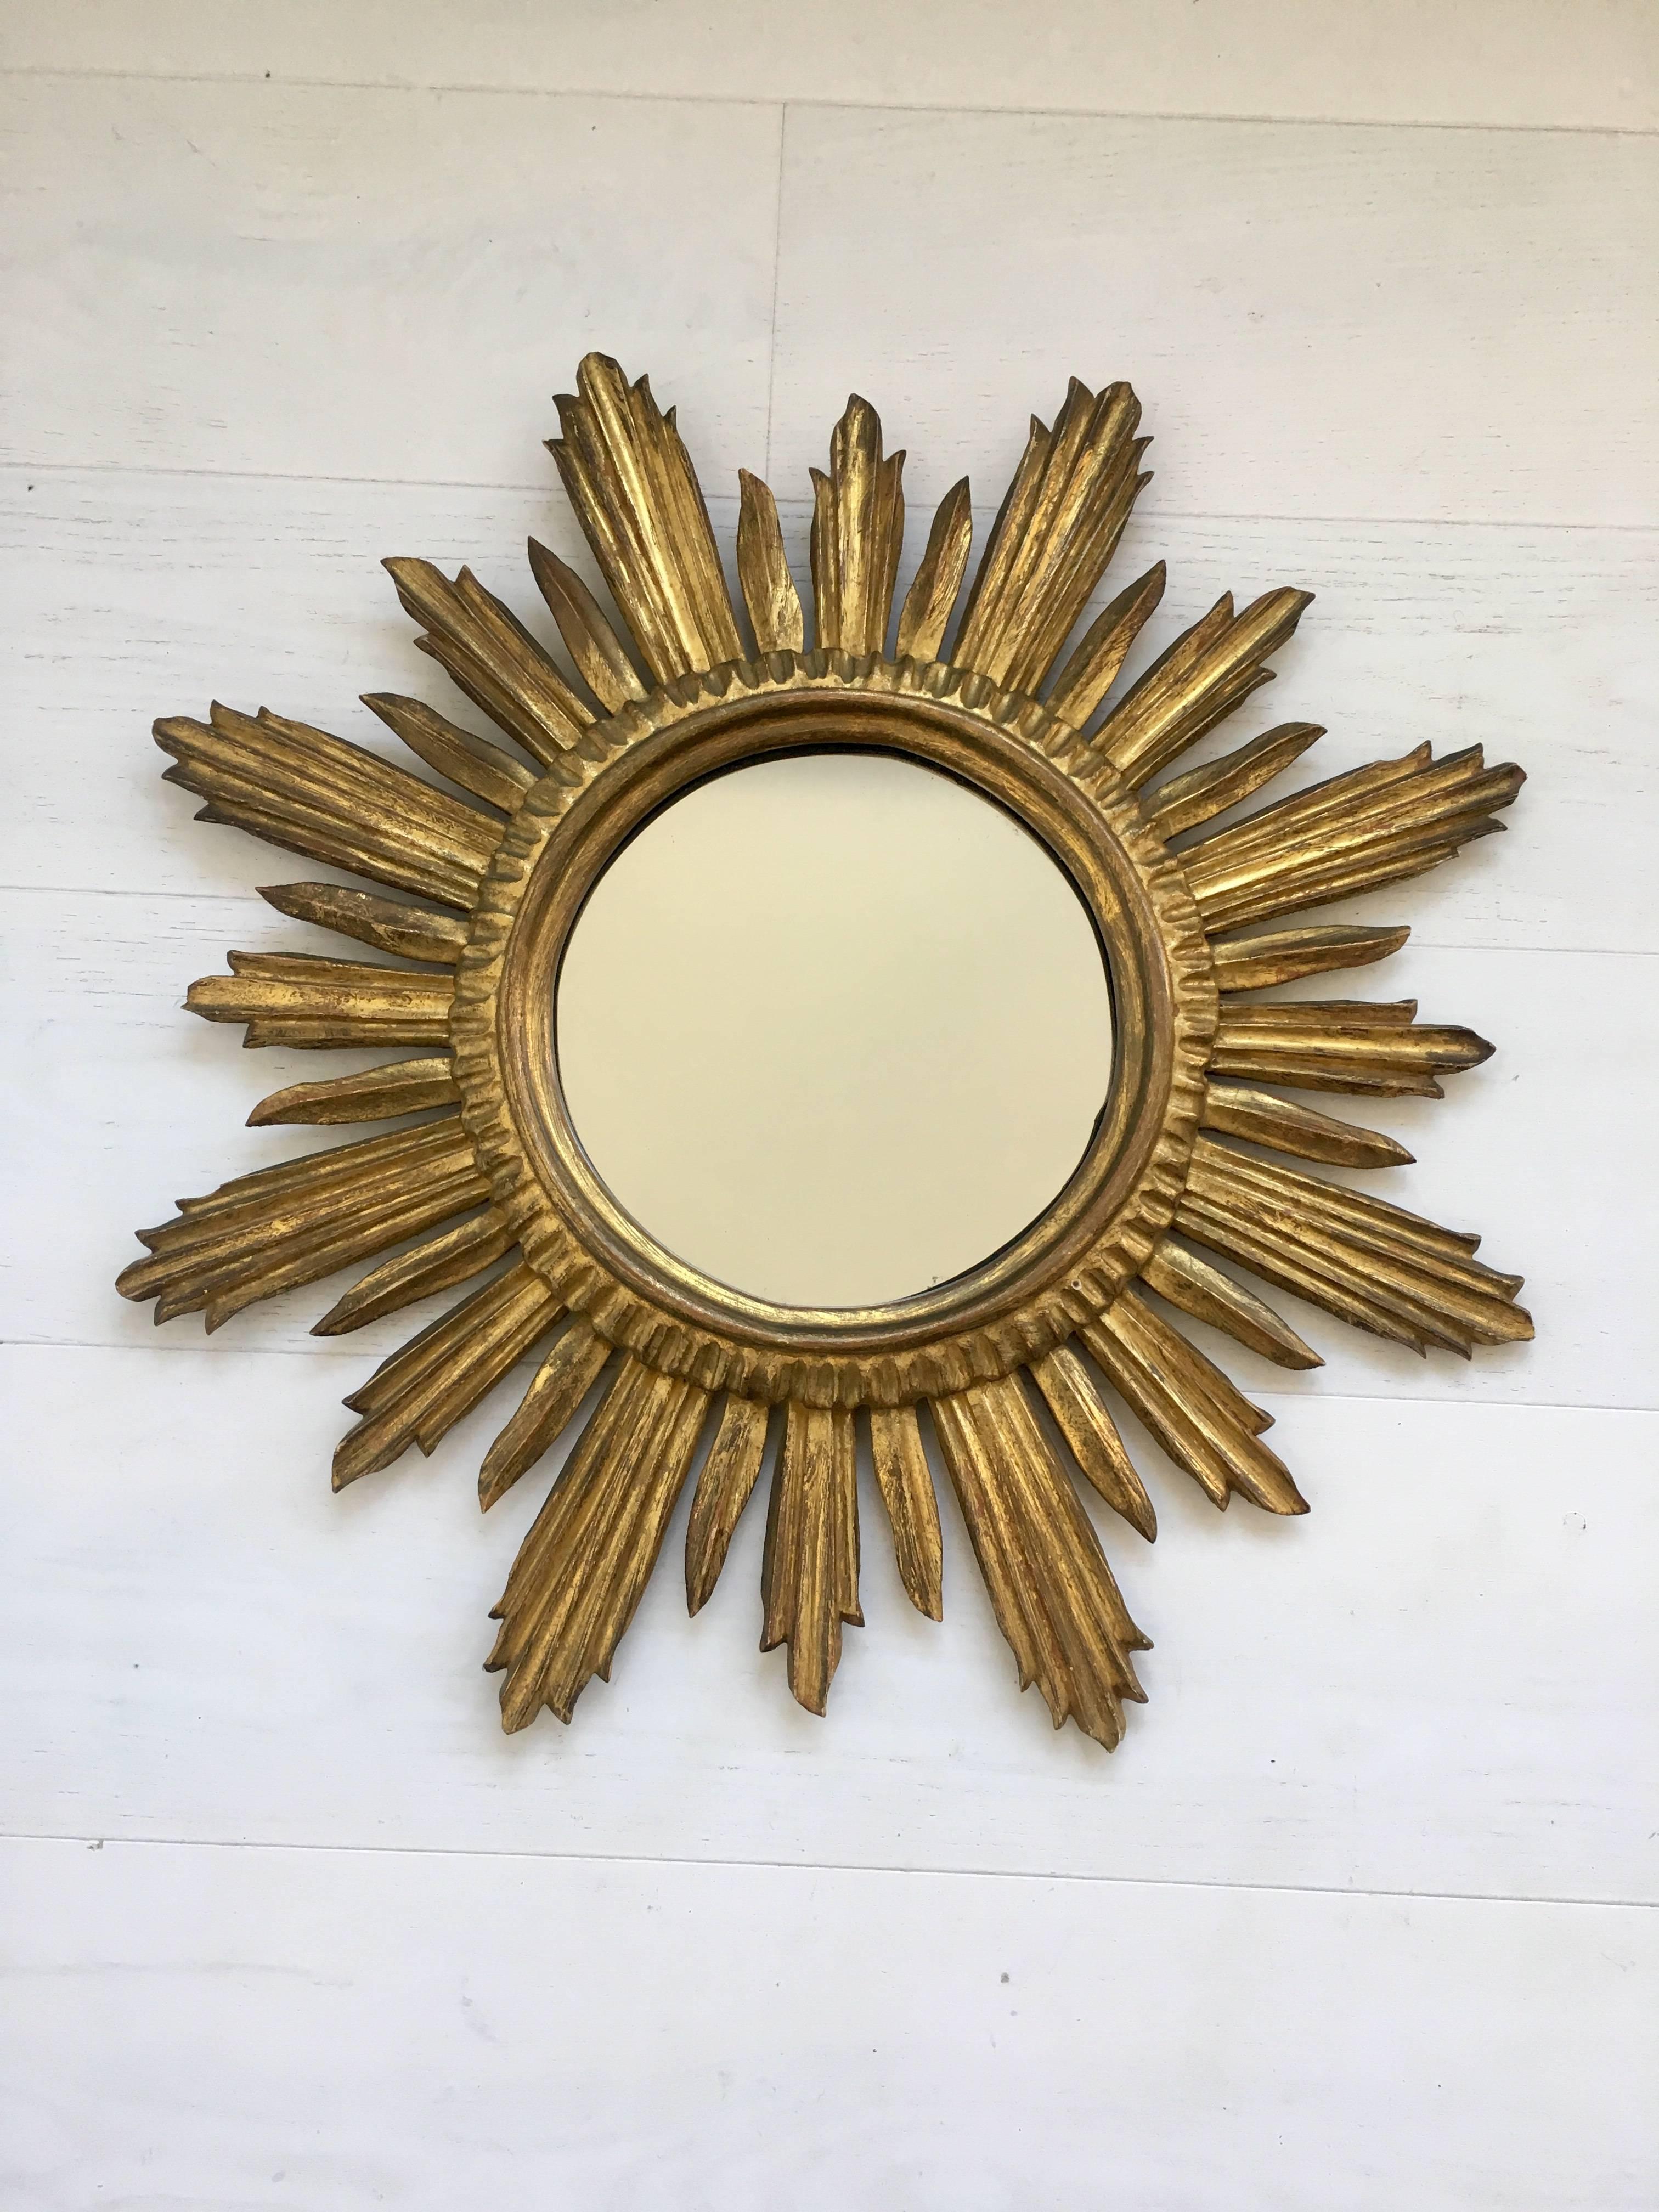 Beautiful coloring and shape to this sunburst mirror, circa 1950

Measures: 55.5 cm across, mirror 22 cm.
     